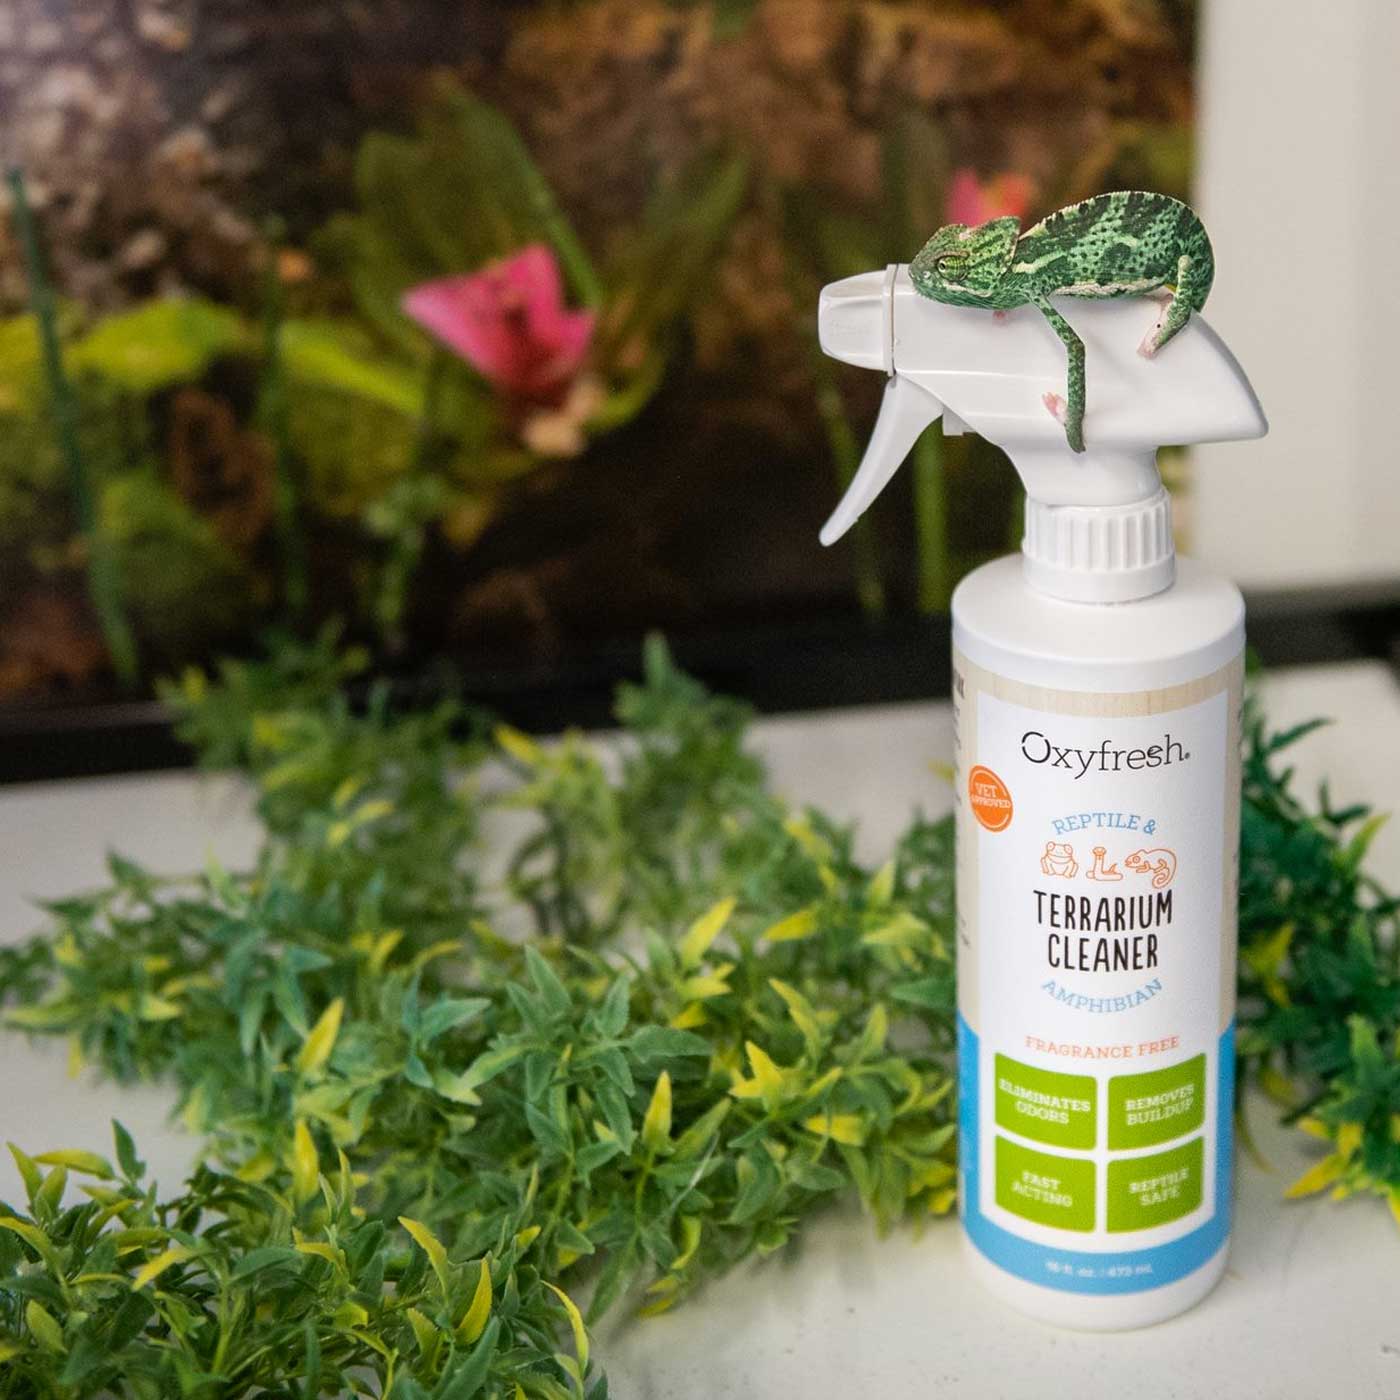 oxyfresh-bleach-free-pet-terrarium-cleaner-reptile-safe-disinfectant